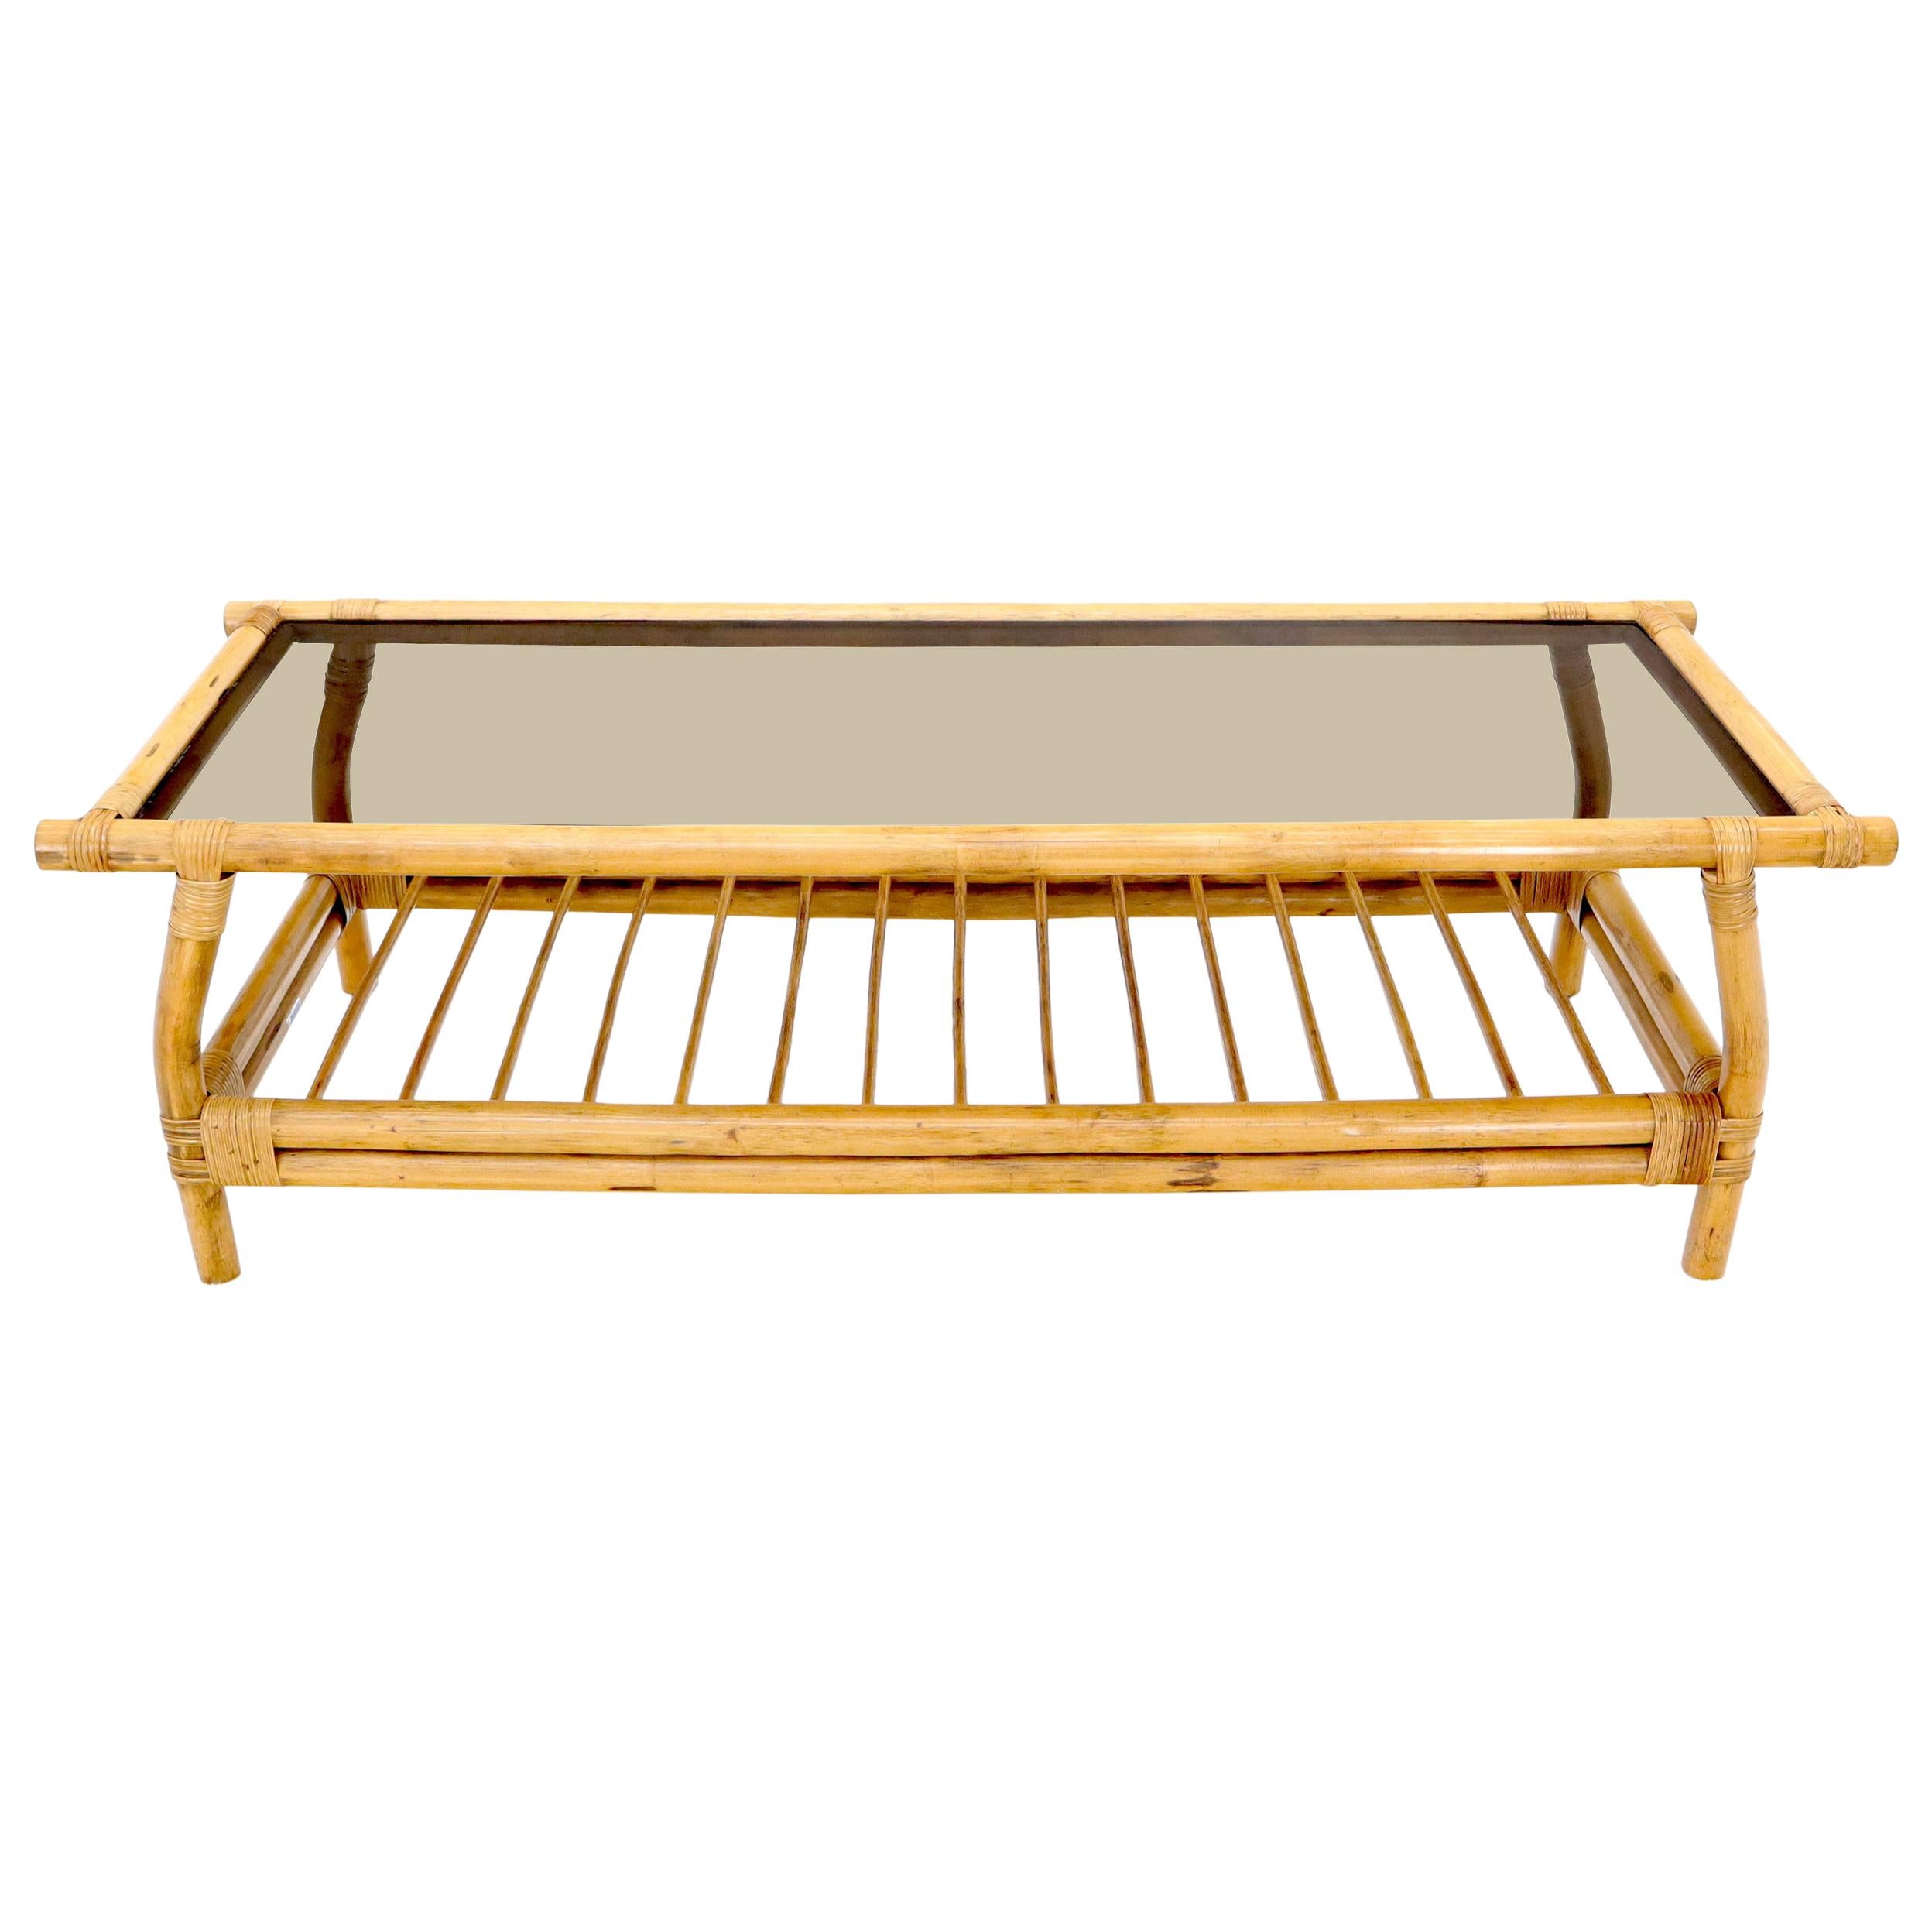 Bamboo Rattan Rectangular Smoked Glass Top Coffee Table with Dowel Bottom Shelf